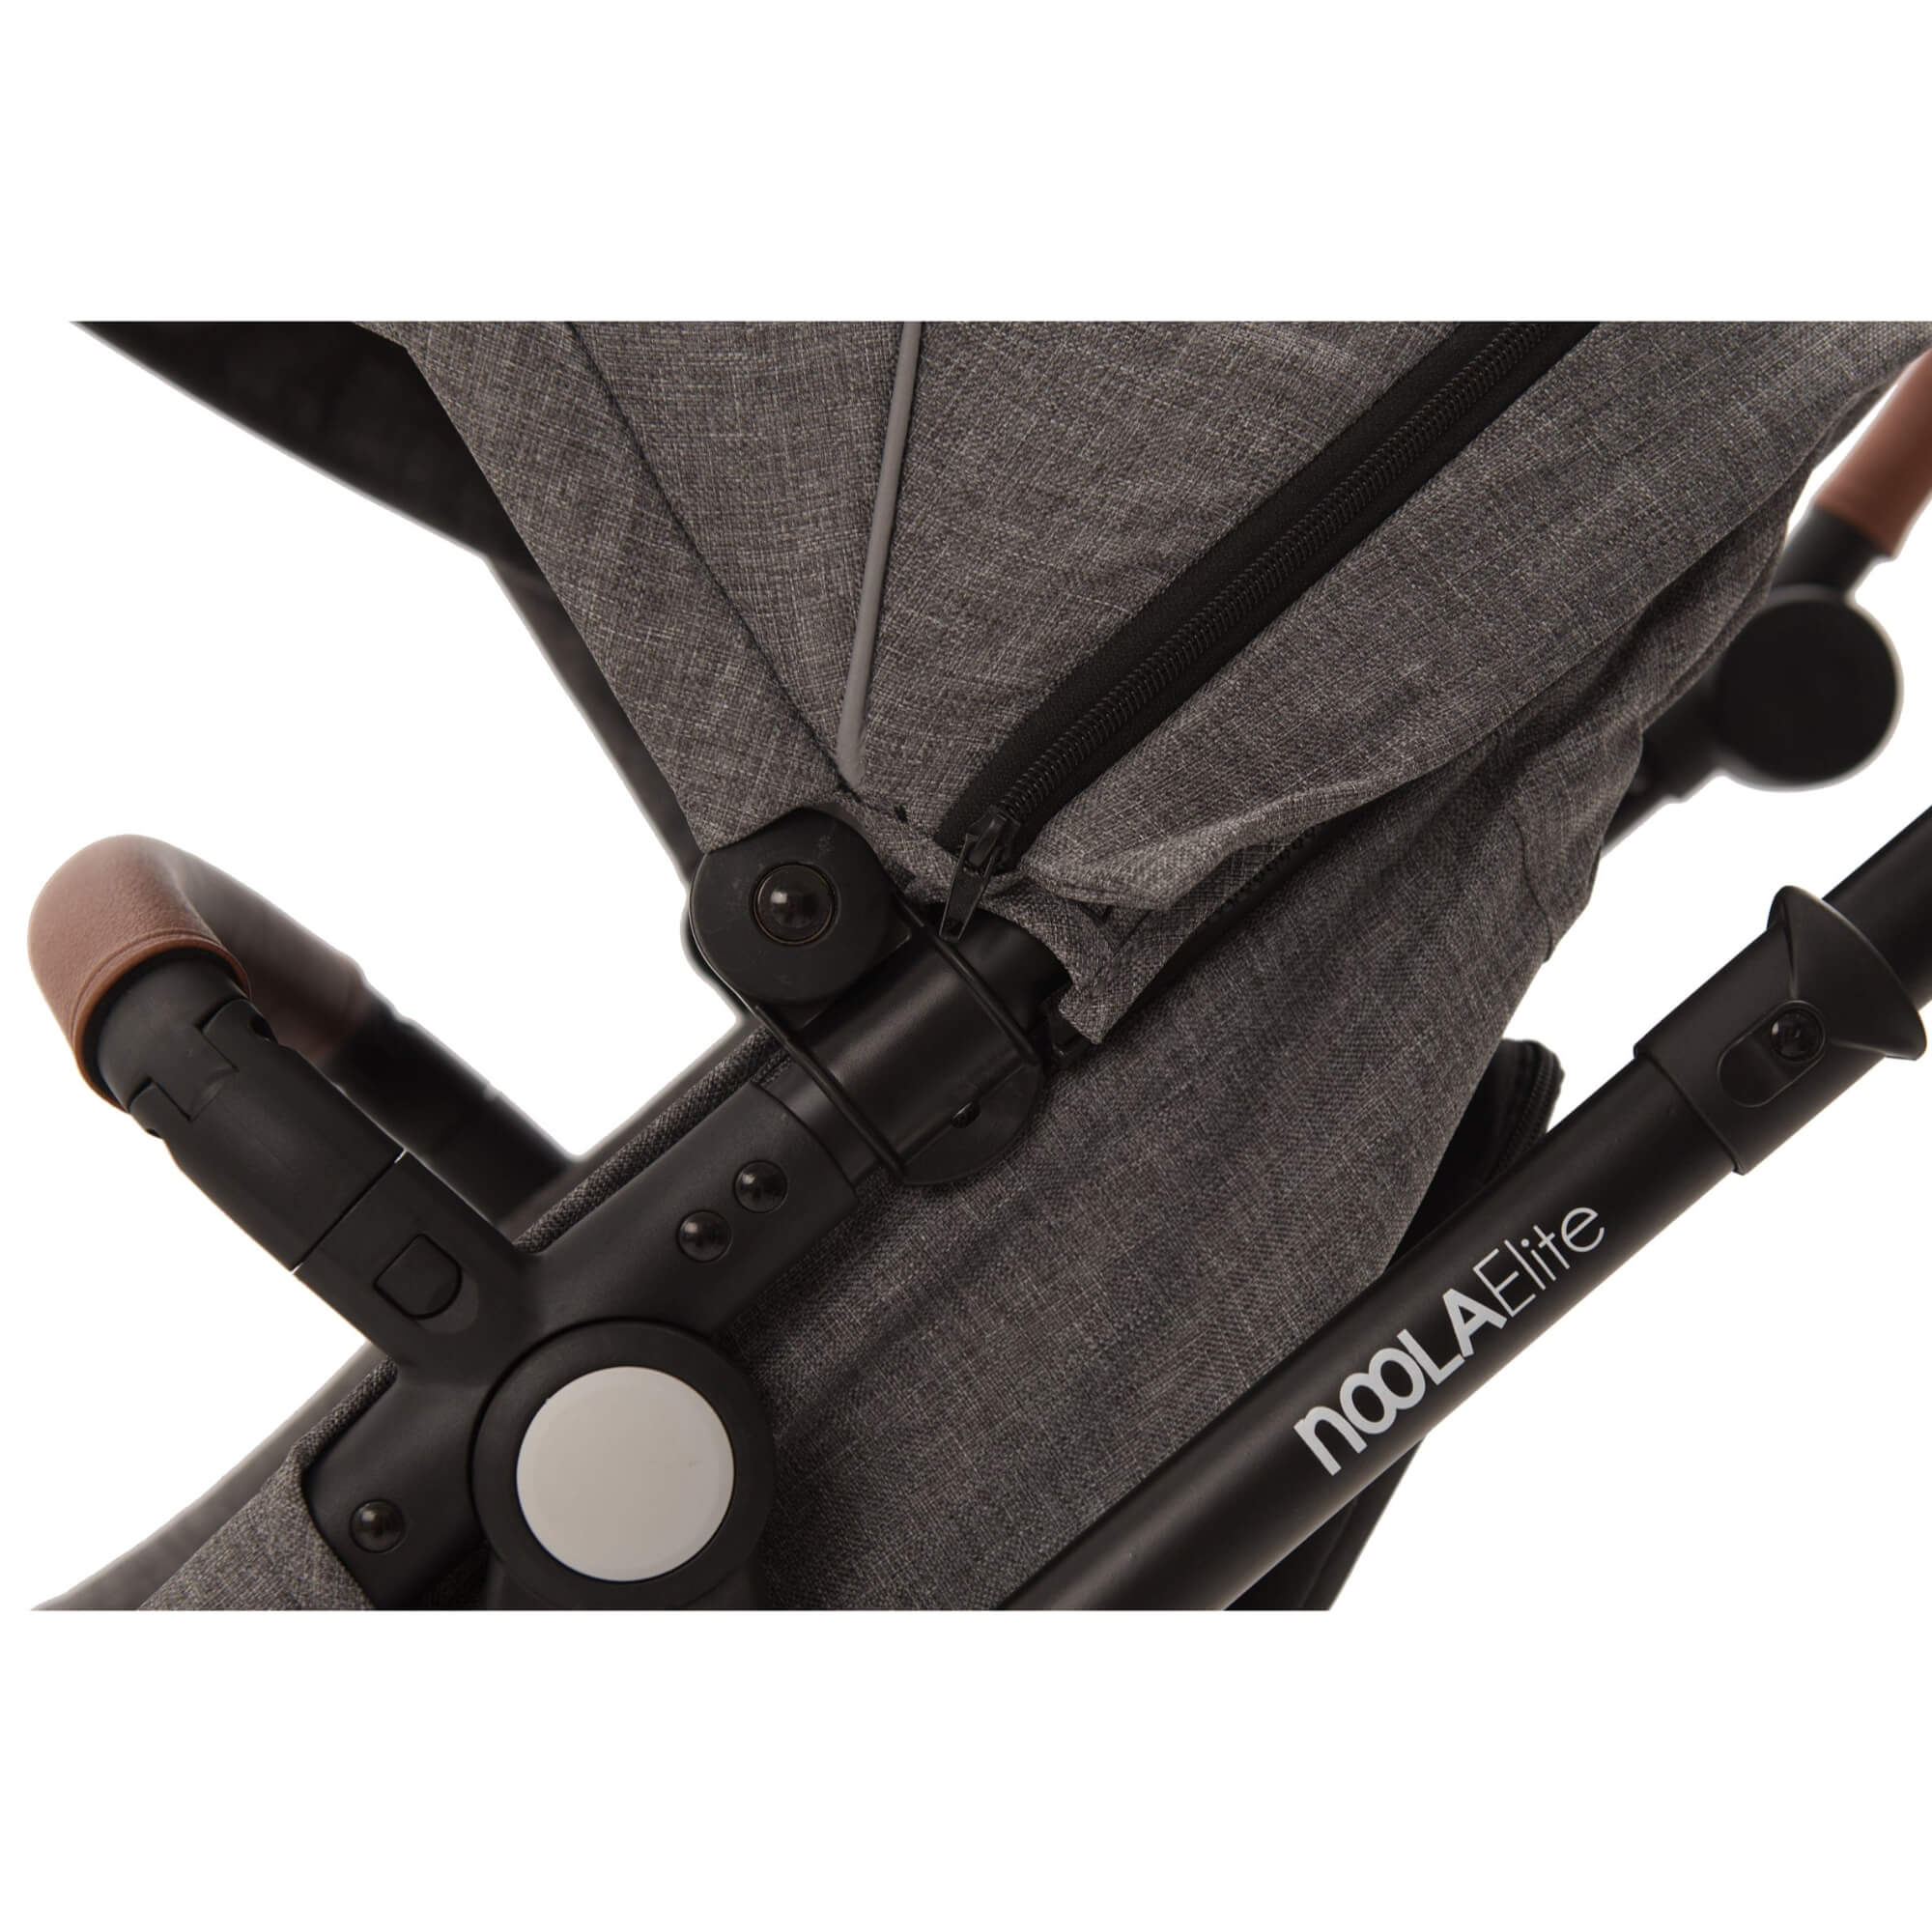 noola the elite 3in1 travel system lunar grey baby stroller